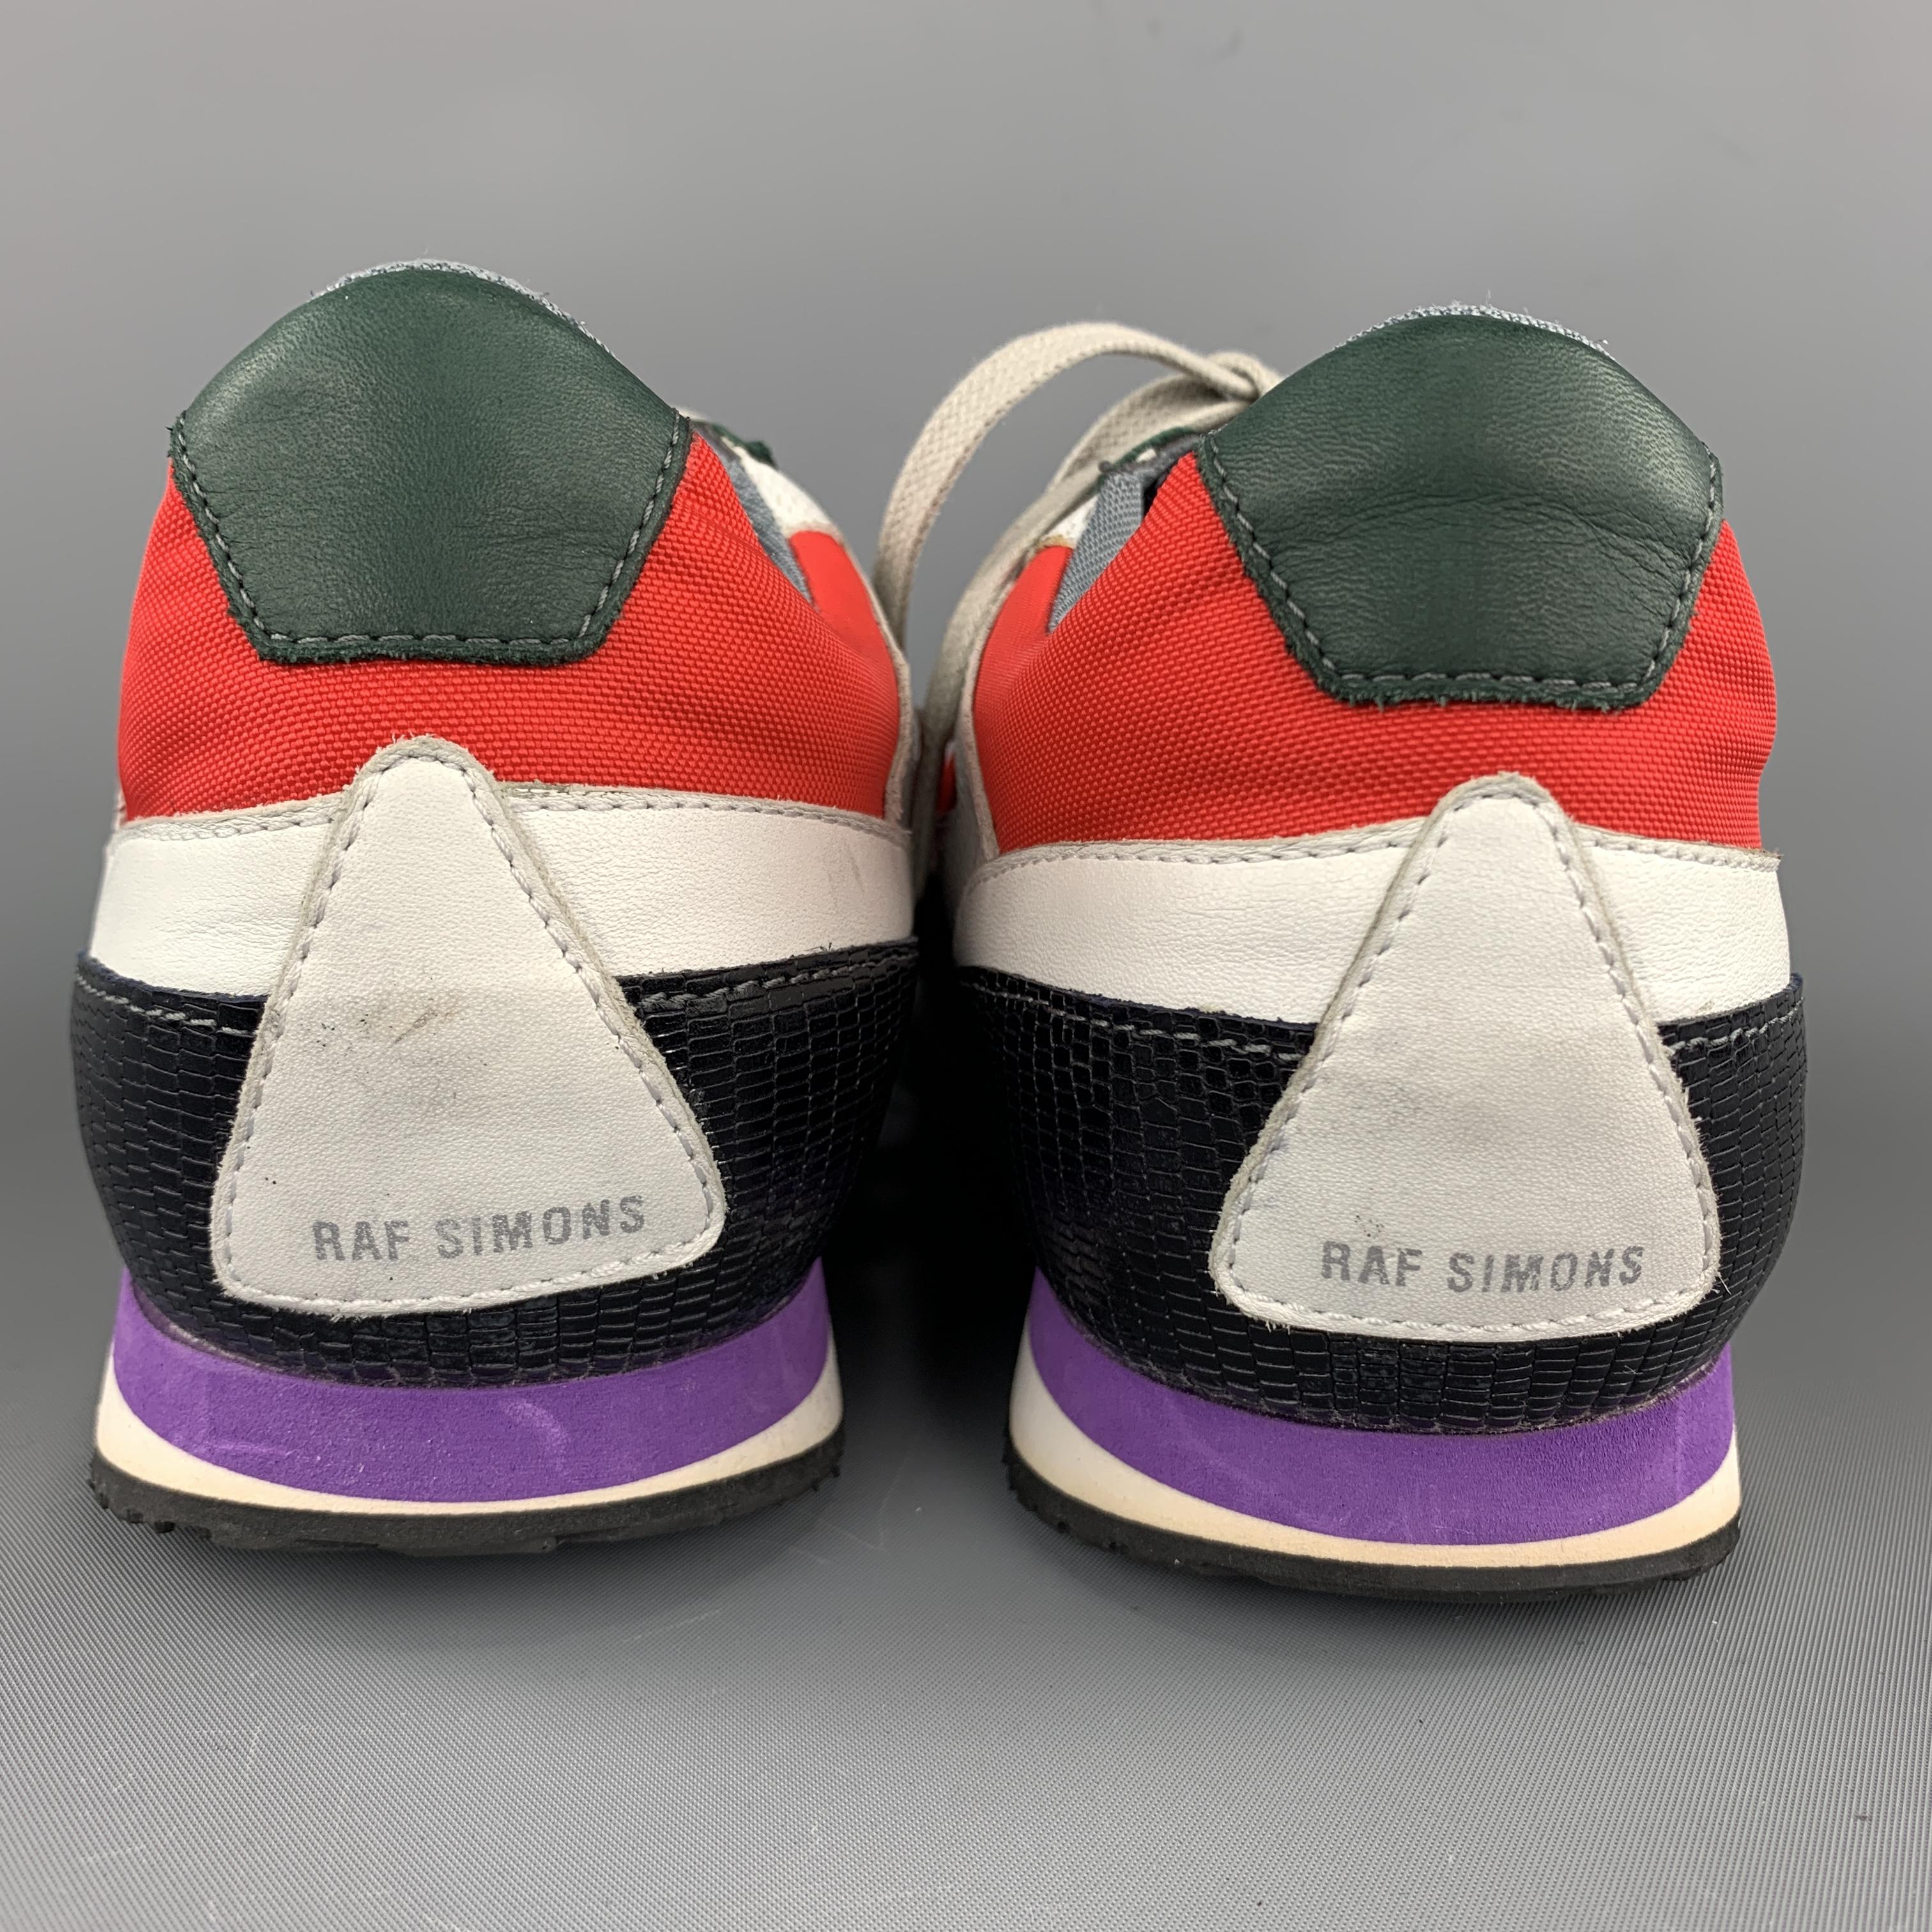 Men's RAF SIMONS Size 10 Multi-Color Color Block Nylon Lace Up Sneakers